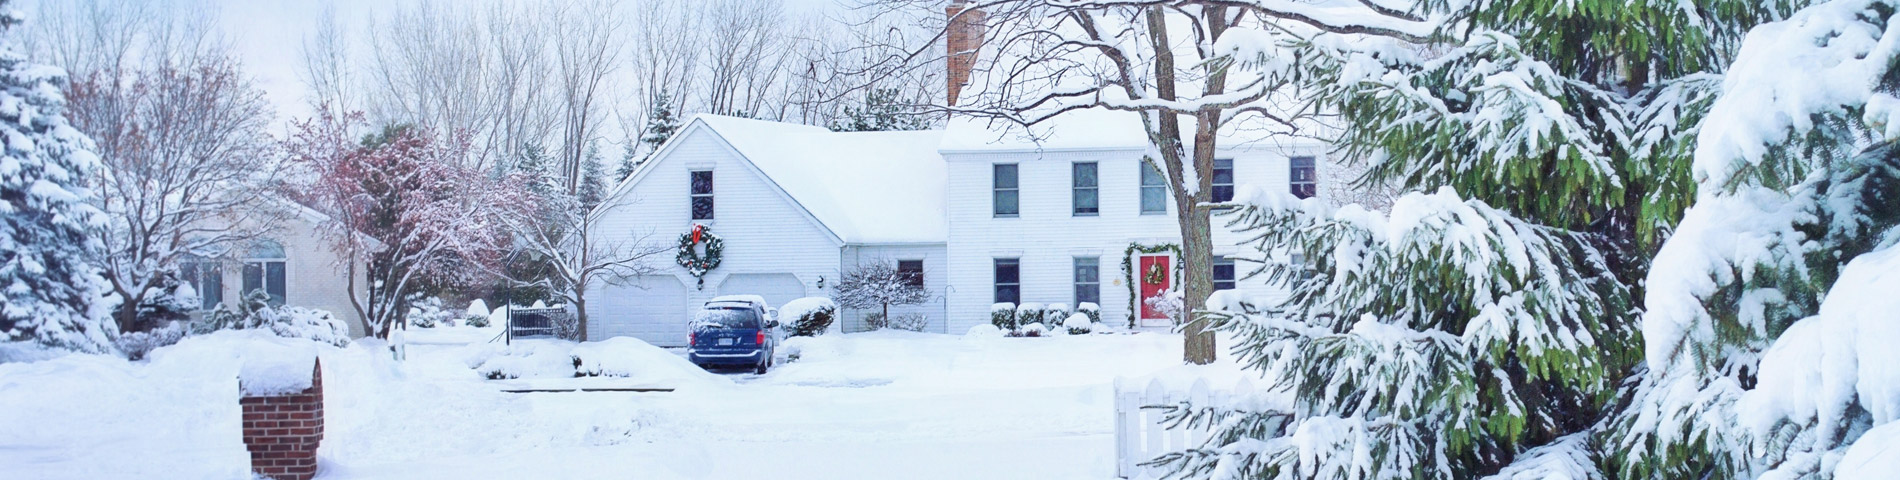 Winterizing Your Home Exterior Checklist